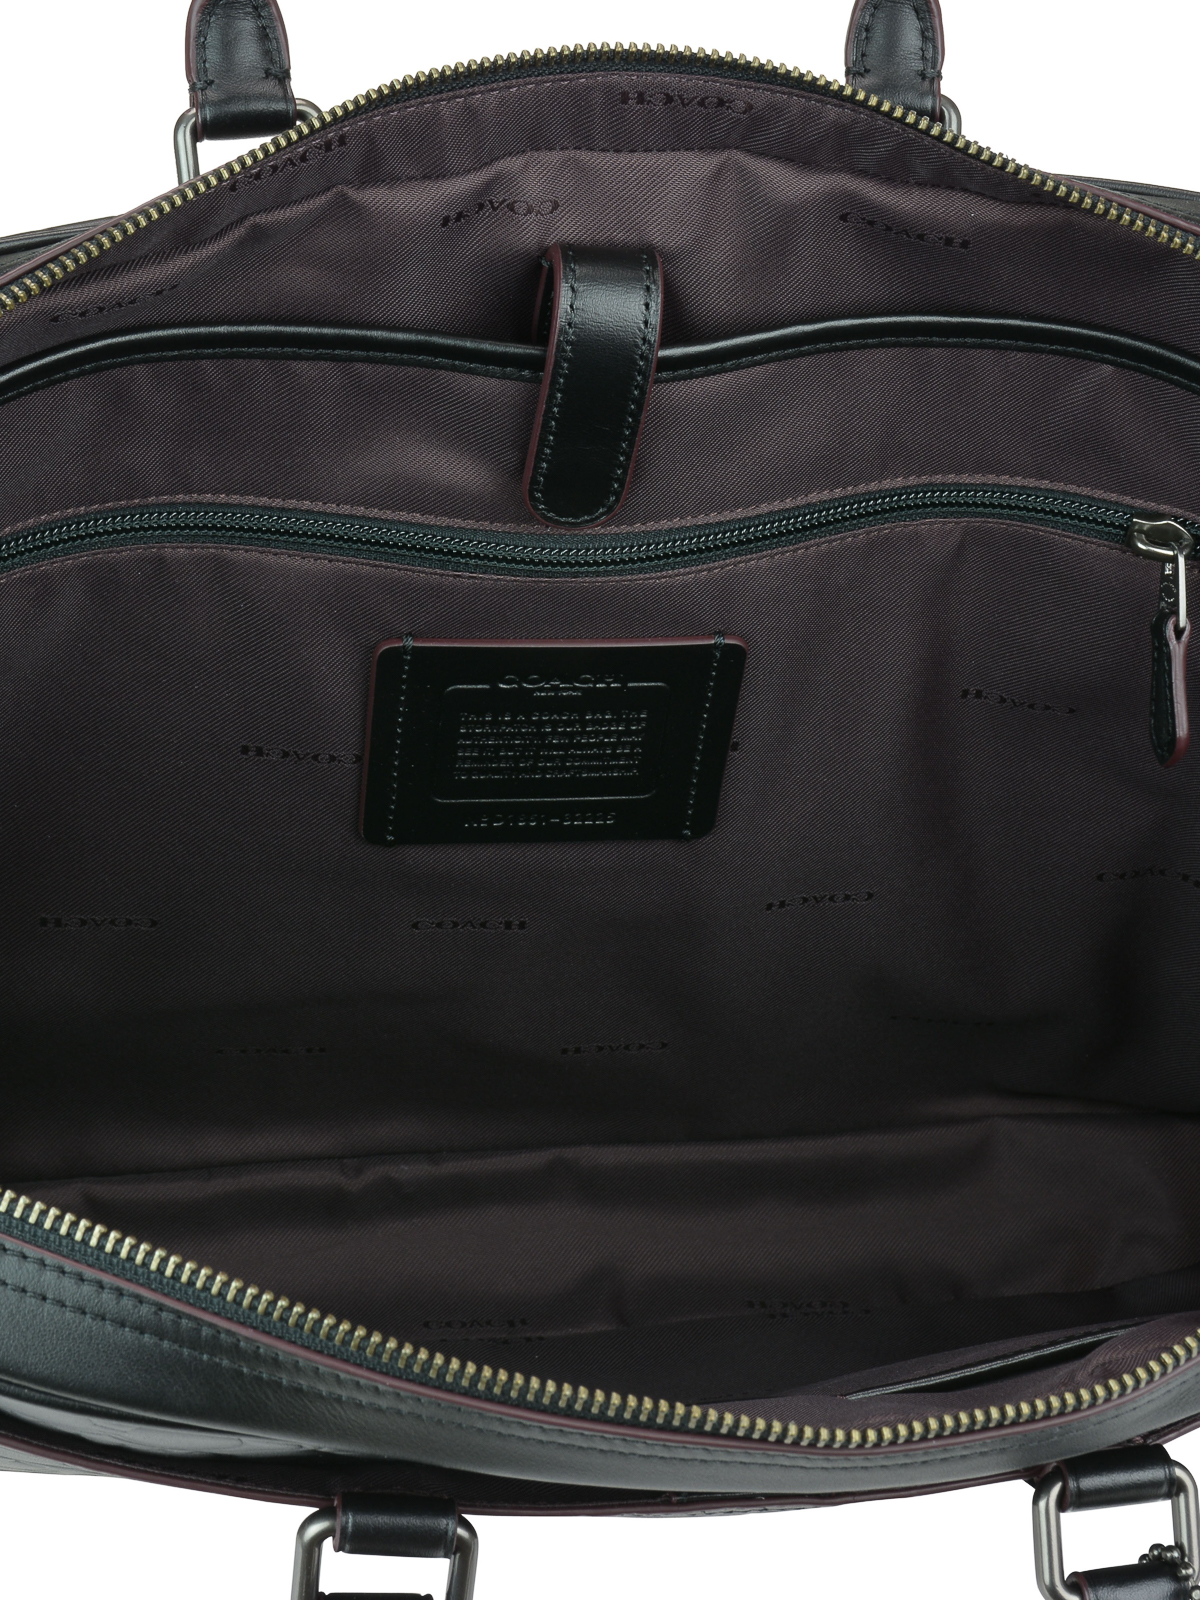 Guaranteed Authentic Coach Crossgrain Leather Laptop Bag F39022 - Black |  Lazada PH